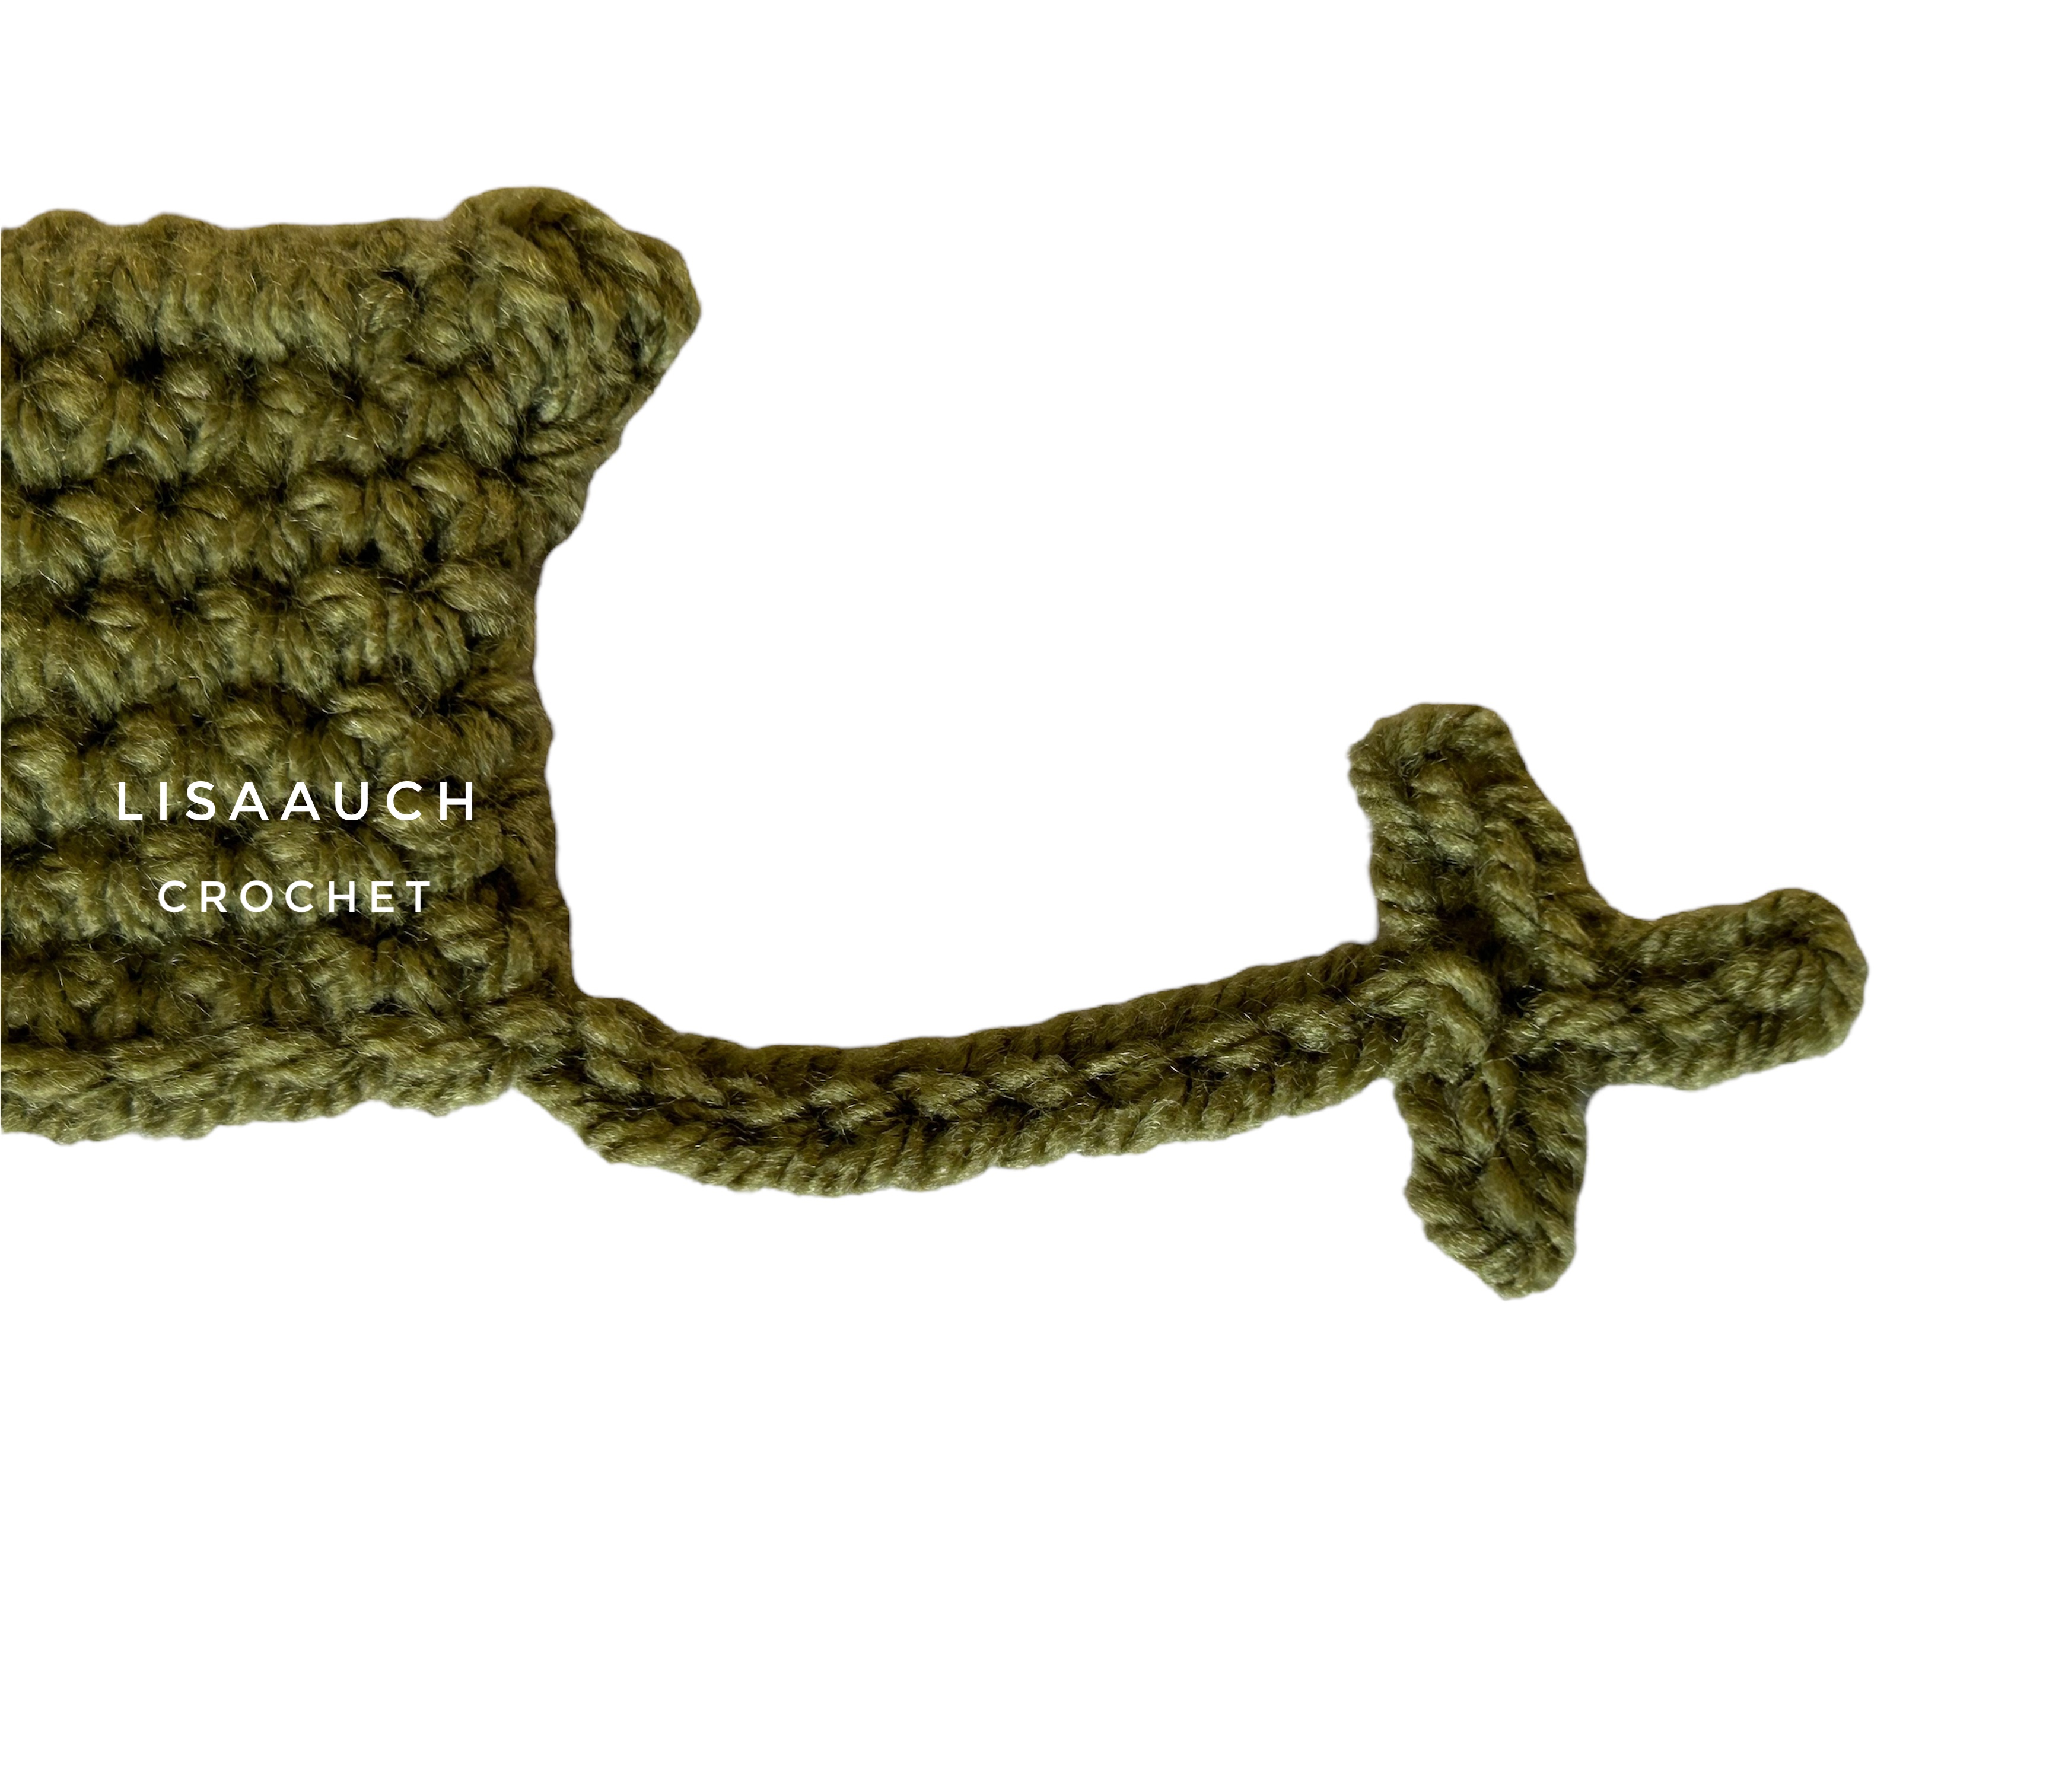 leggy frog crochet pattern free easy crochet frog pattern simple frog crochet pattern